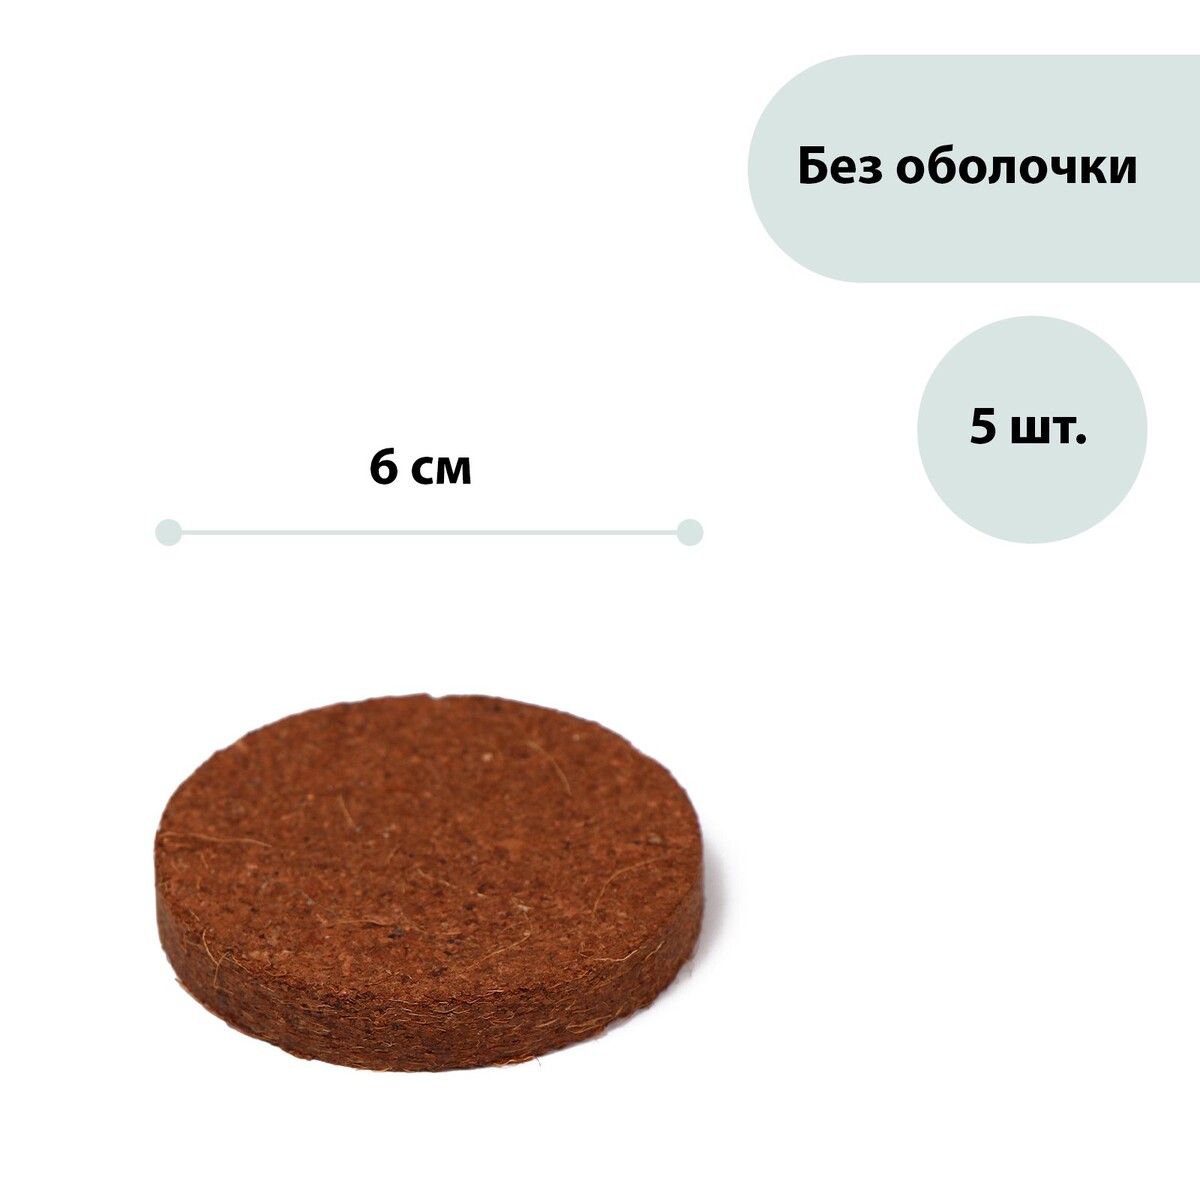 Таблетки кокосовые, d = 6 см, набор 5 шт., без оболочки, greengo костарокс таблетки 90мг 28